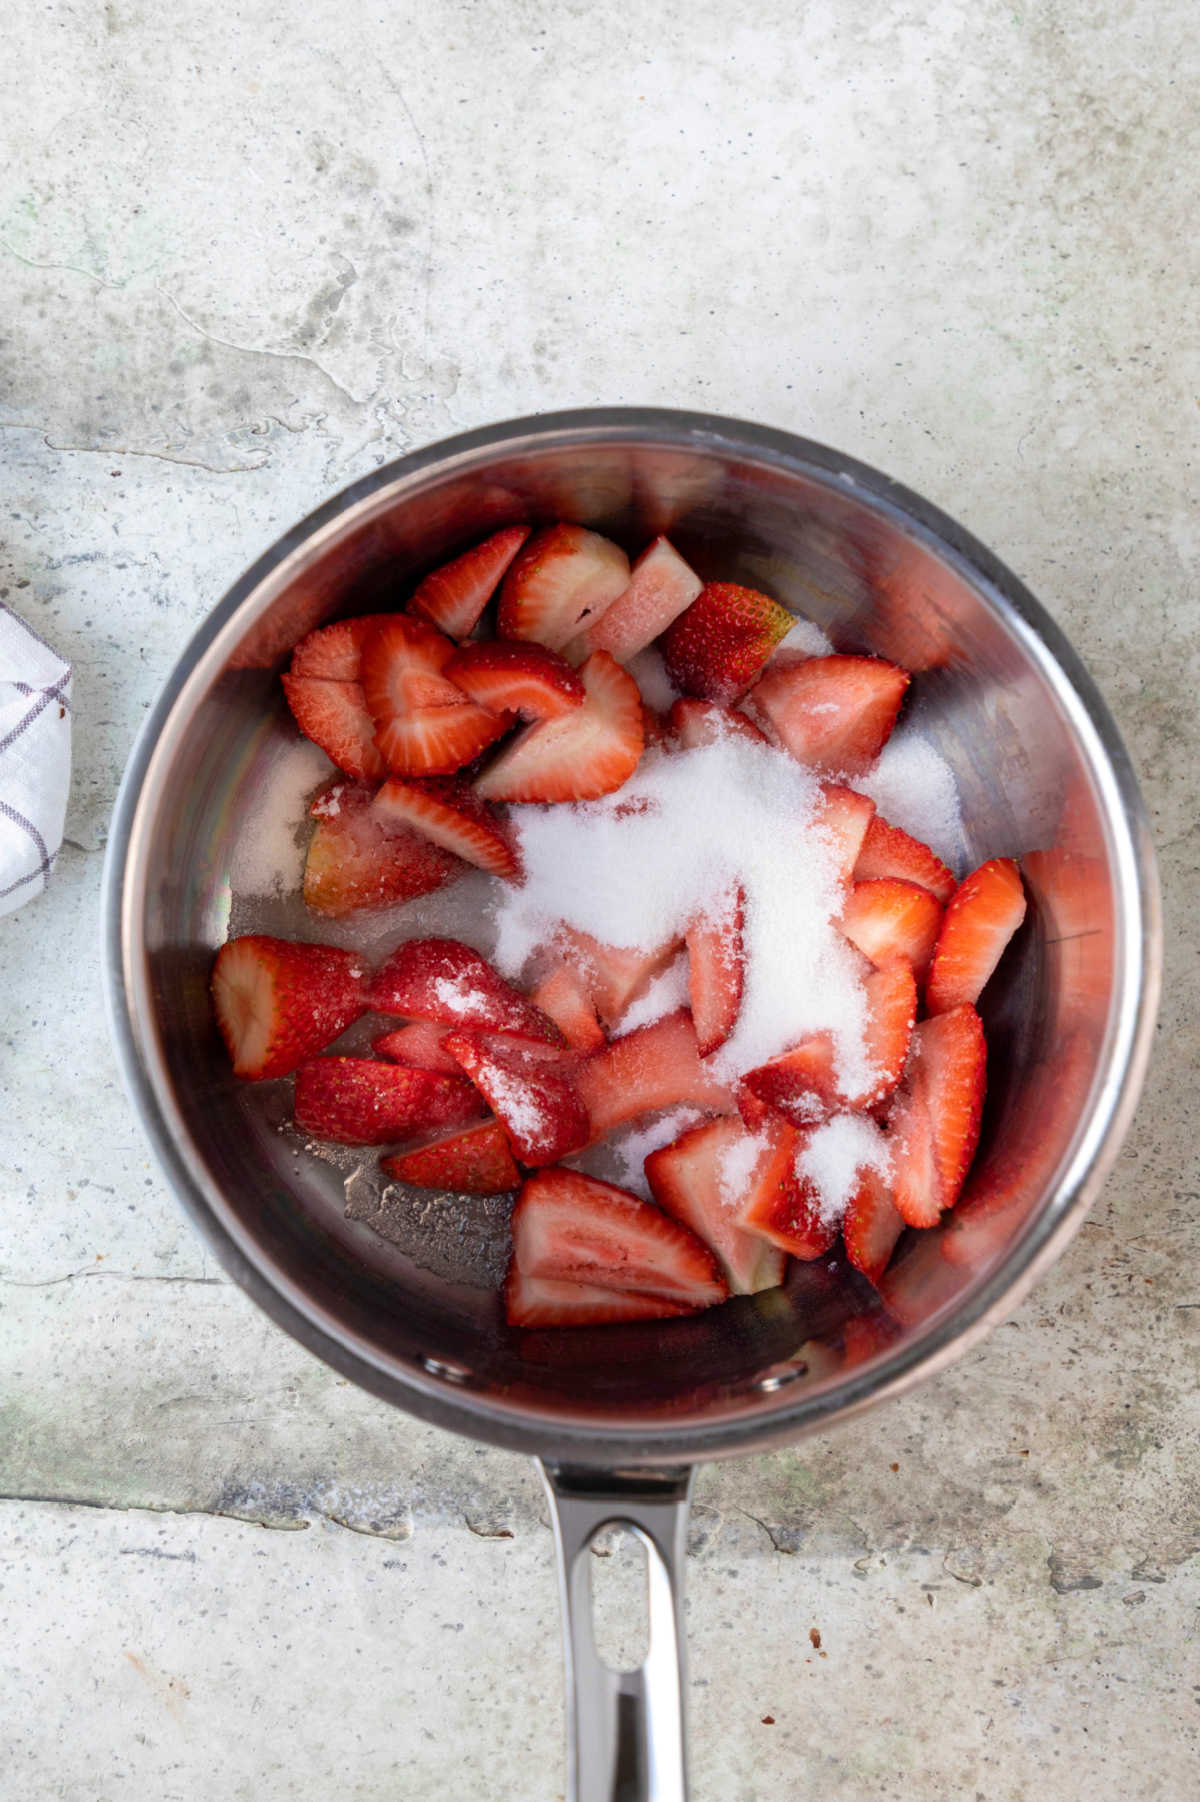 Strawberries and sugar in a saucepan.